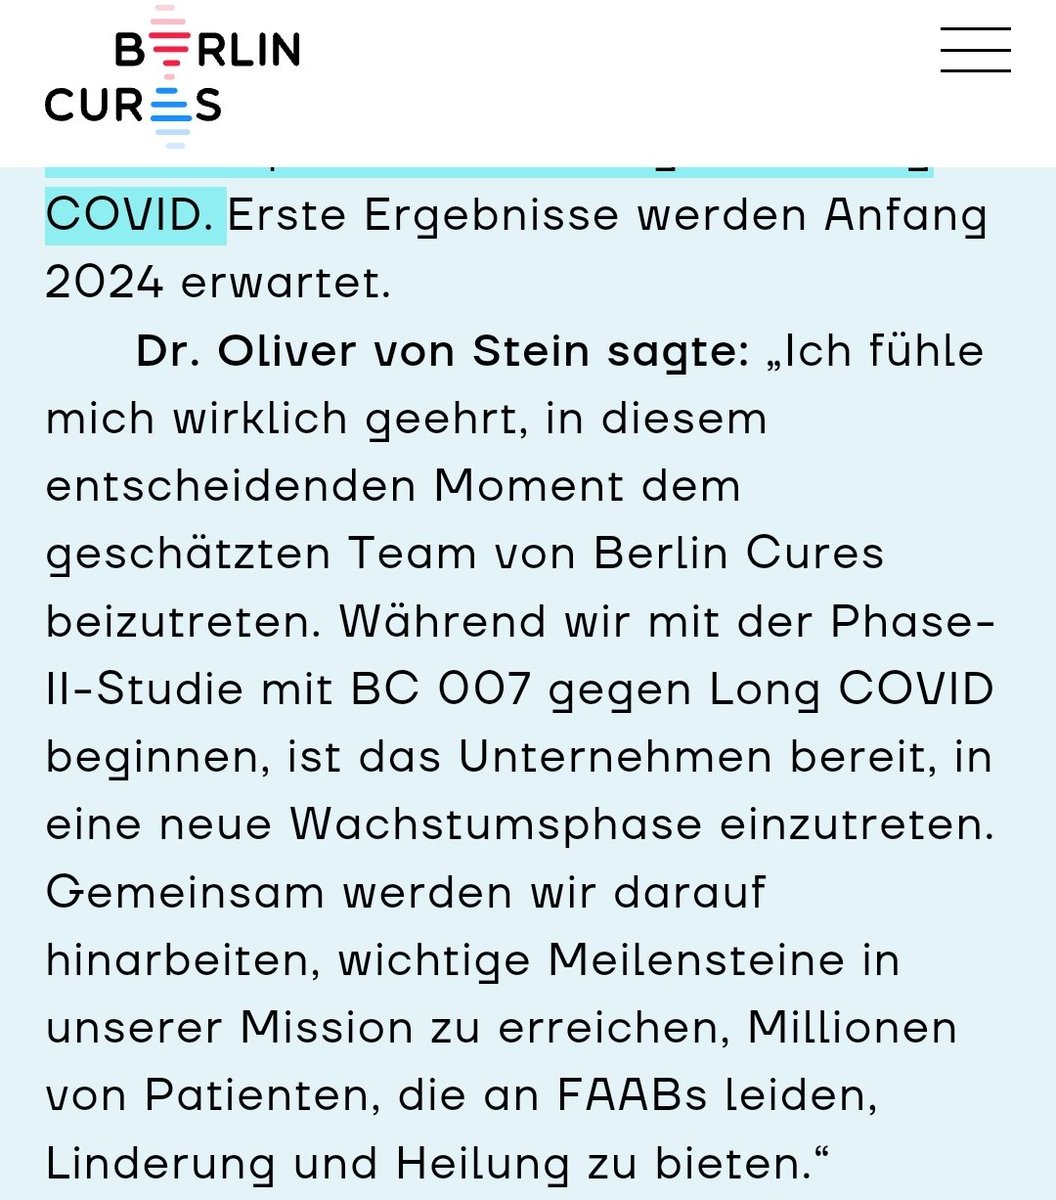 berlincures.com/en/news/new-ceo
@starkwatzinger @Karl_Lauterbach @BMBF_Bund @BMG_Bund